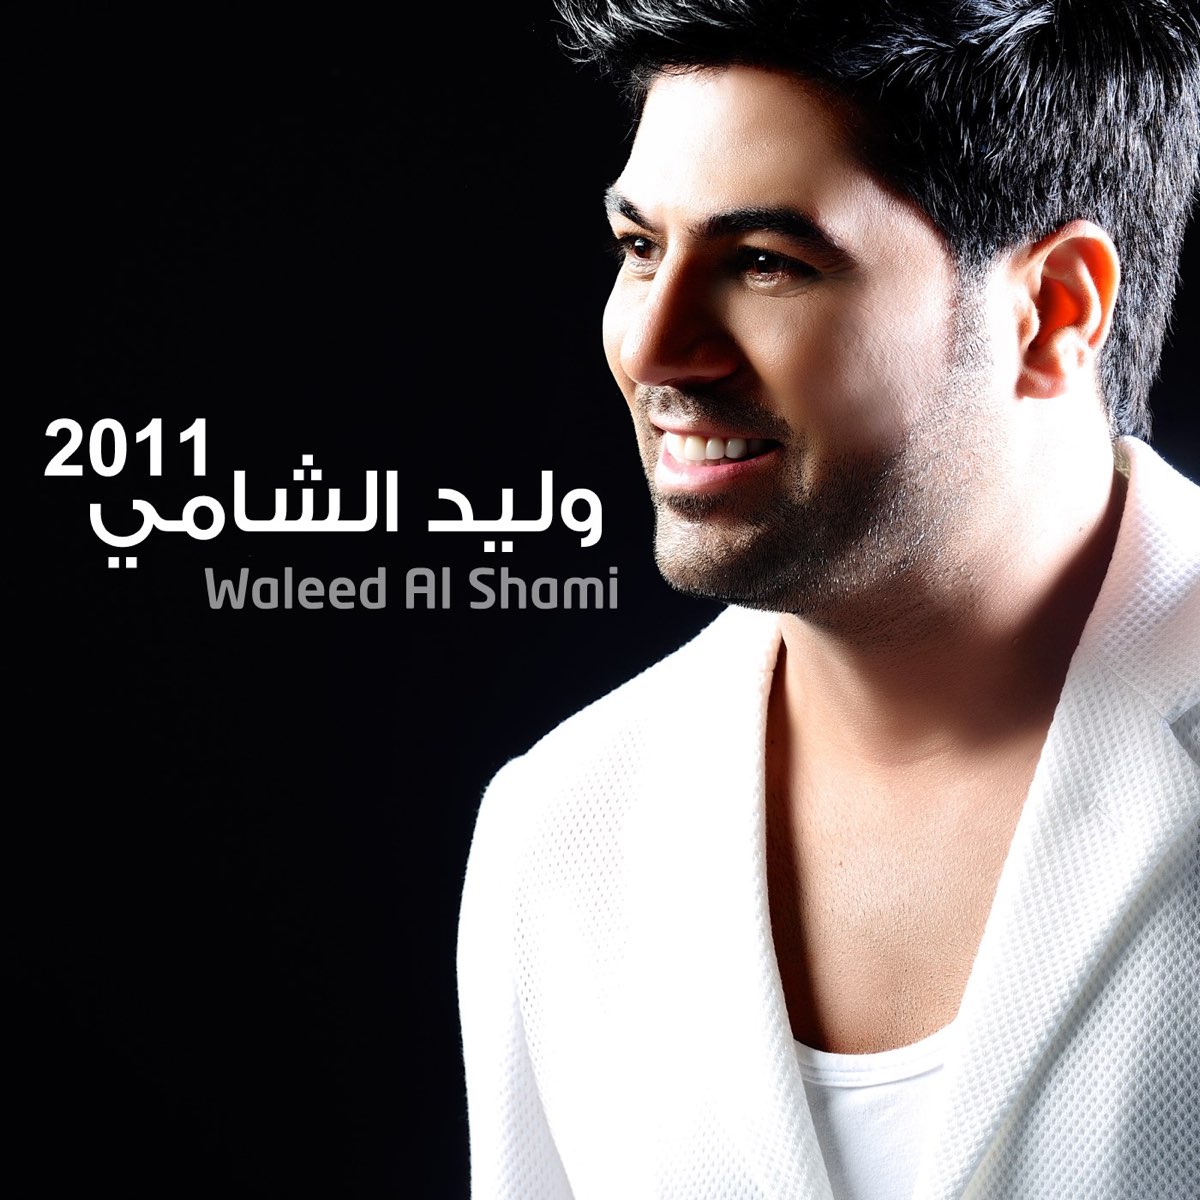 Al Shami. Шами 2011. Waleed al Shami. Shami album. Перевод песни sham